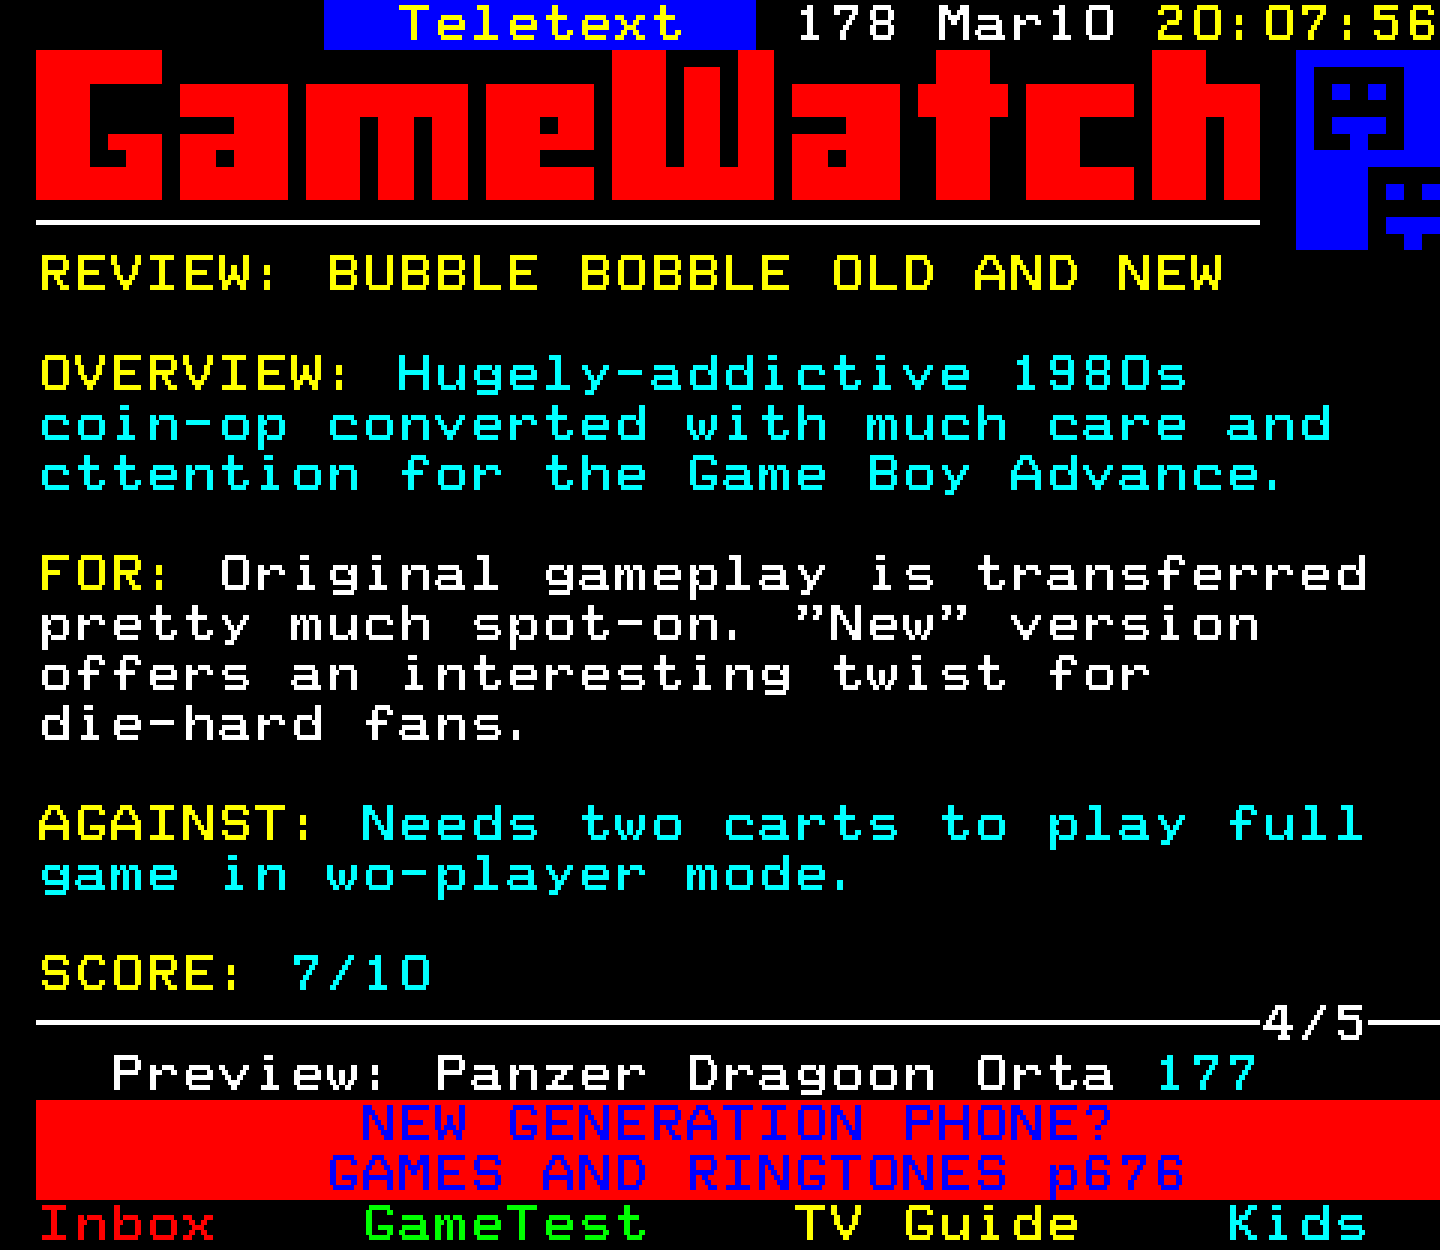 GameCentral, Teletext - 2003